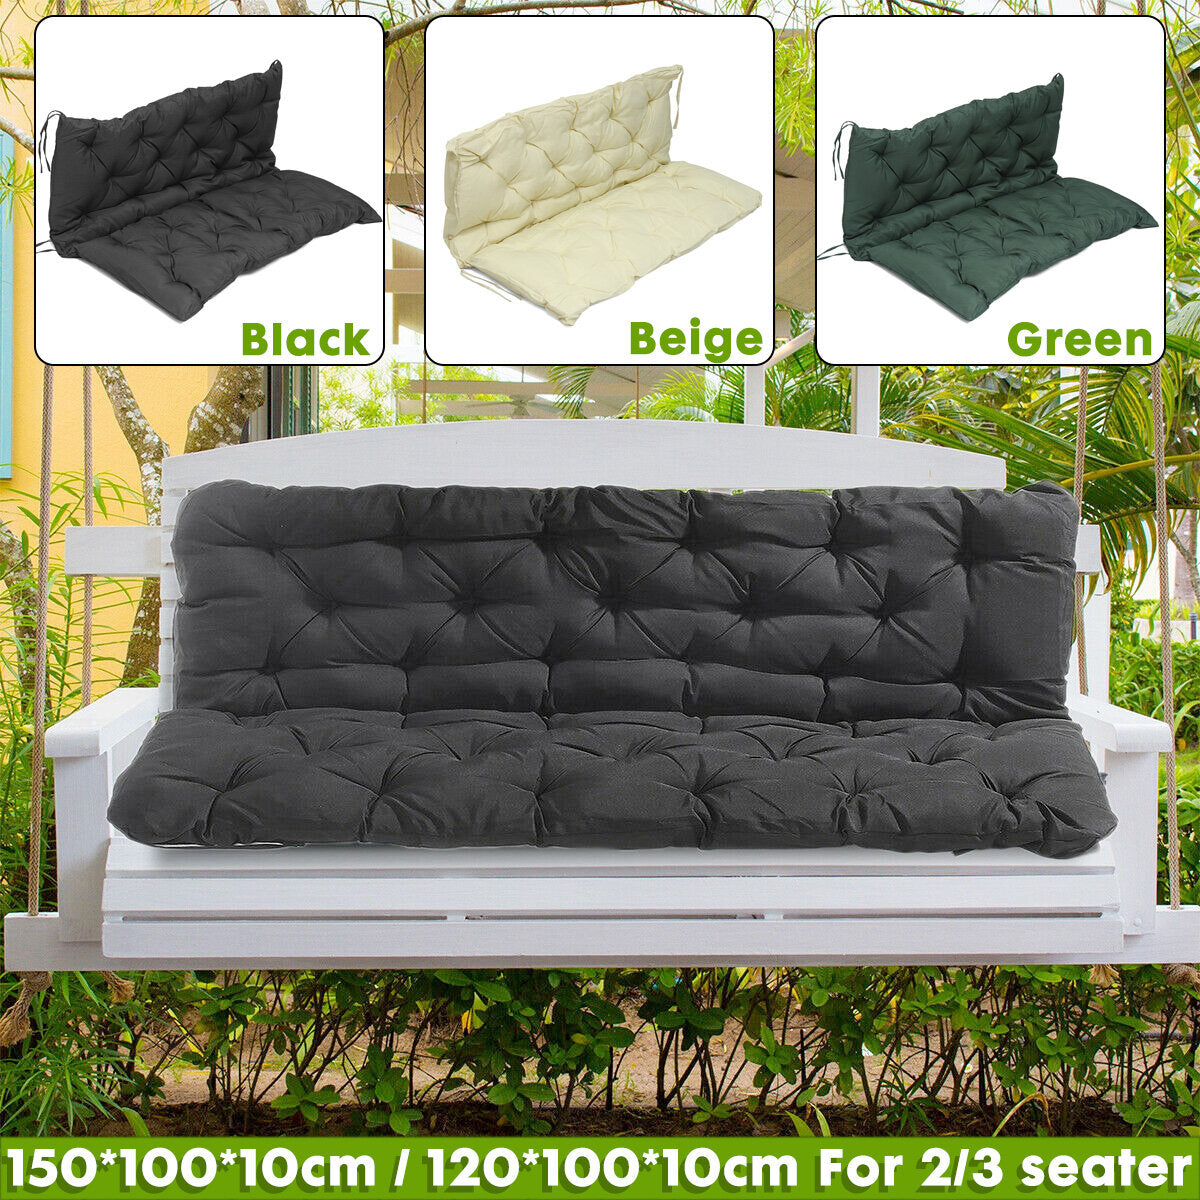 2/3 Seater Bench Swing Seat Cushion Garden Furniture Pad Backrest Polyester Mat